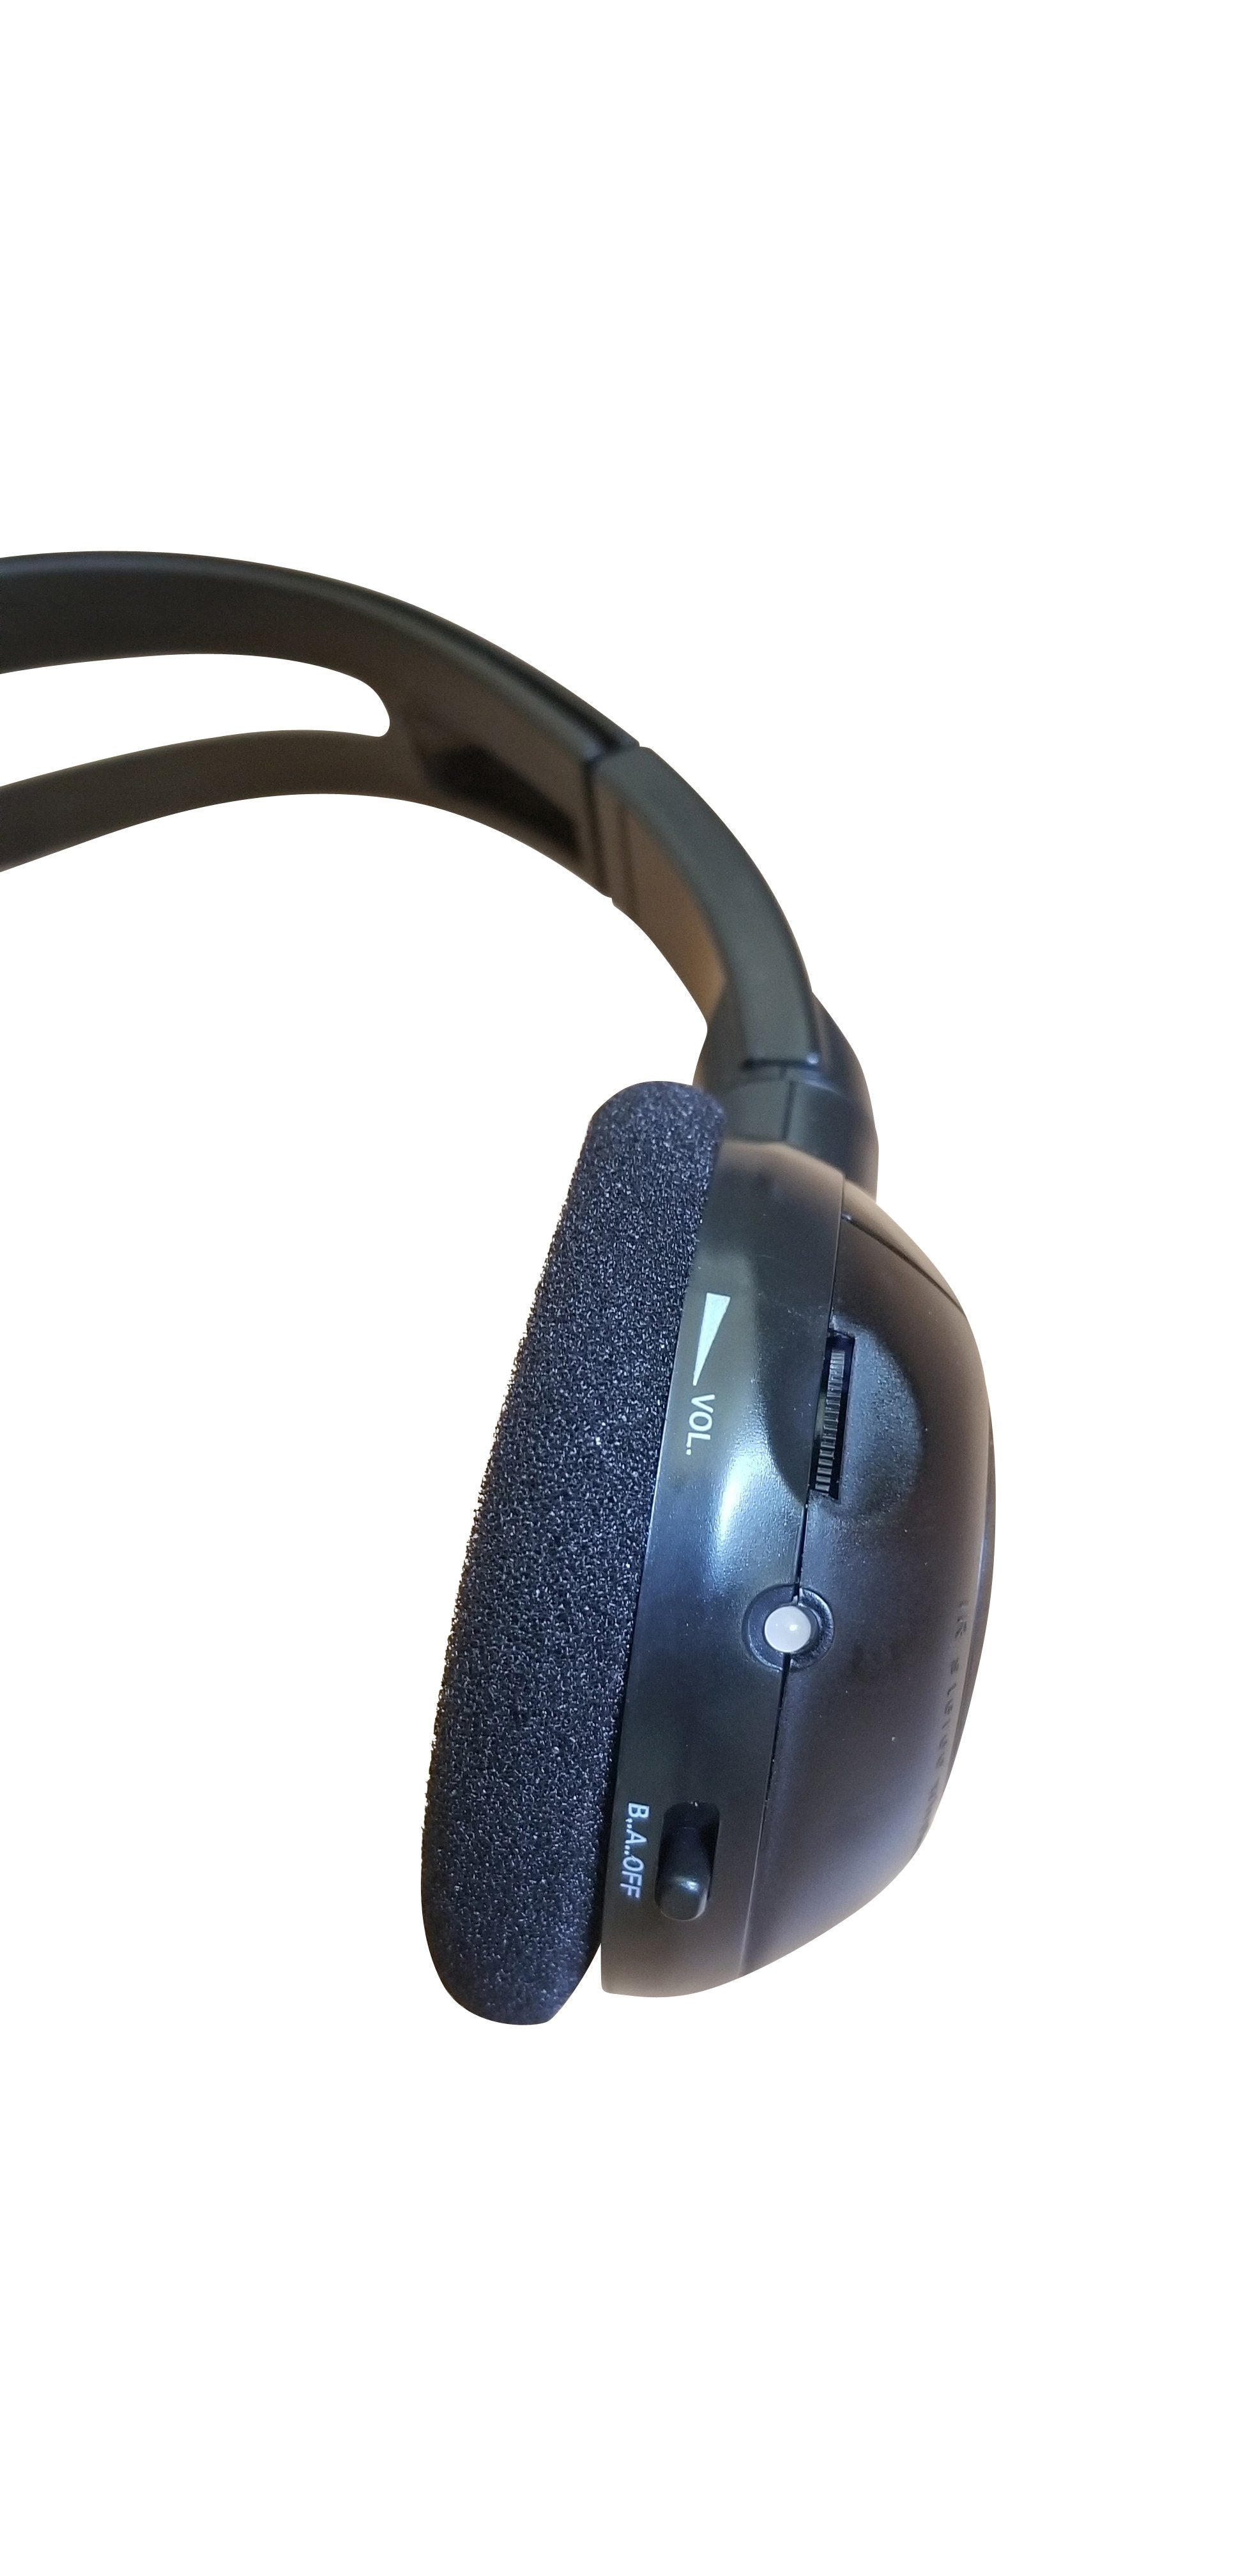 2015 Infiniti Q60 Wireless DVD Headphone